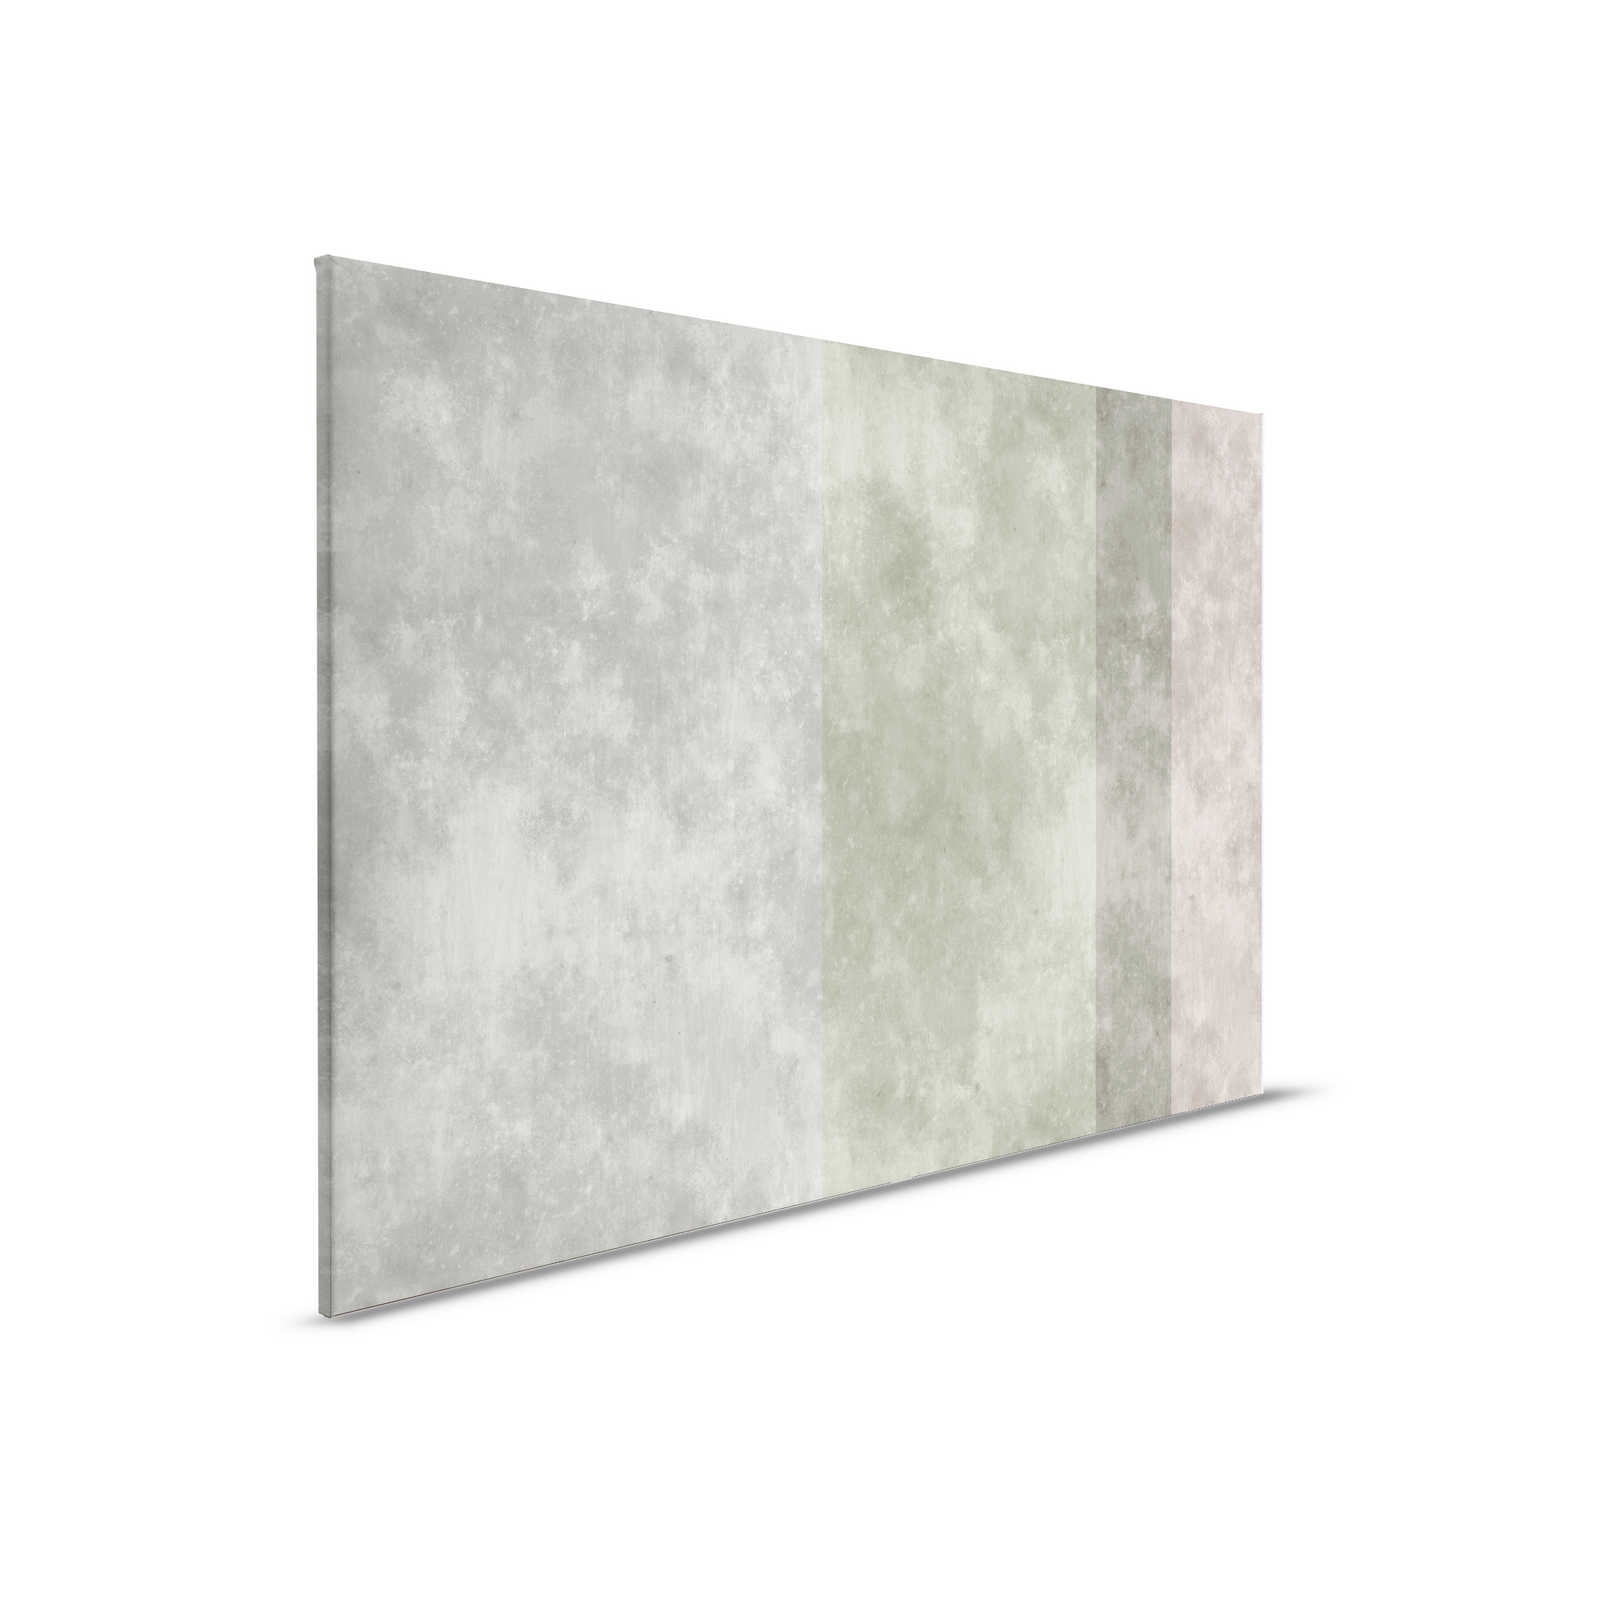 Concrete look canvas picture with stripes - 0.90 m x 0.60 m
